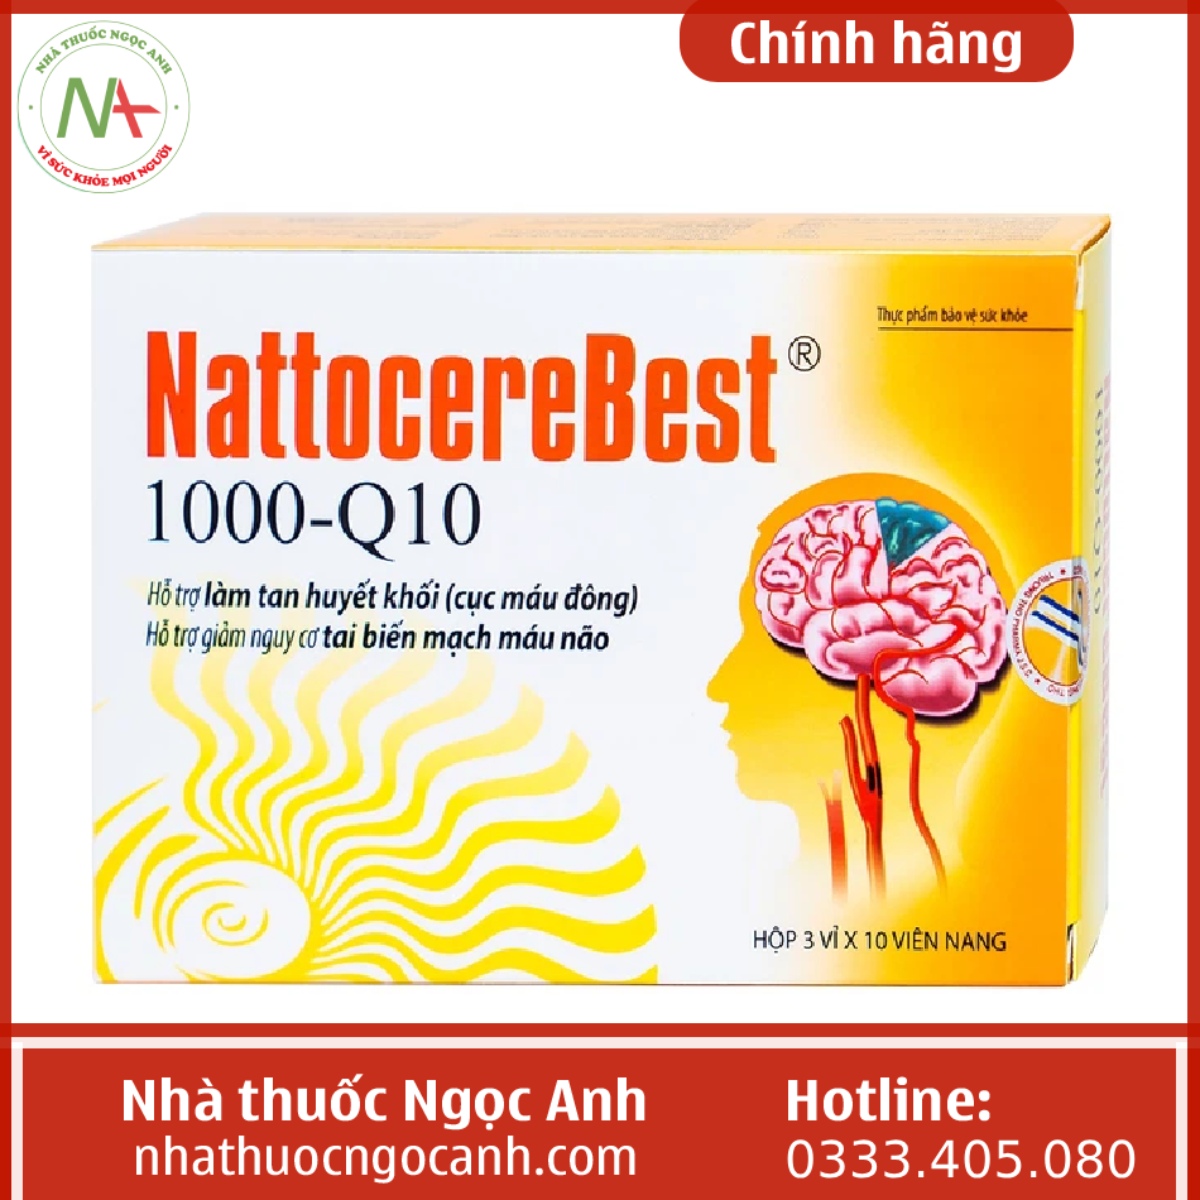 NattocereBest 1000-Q10